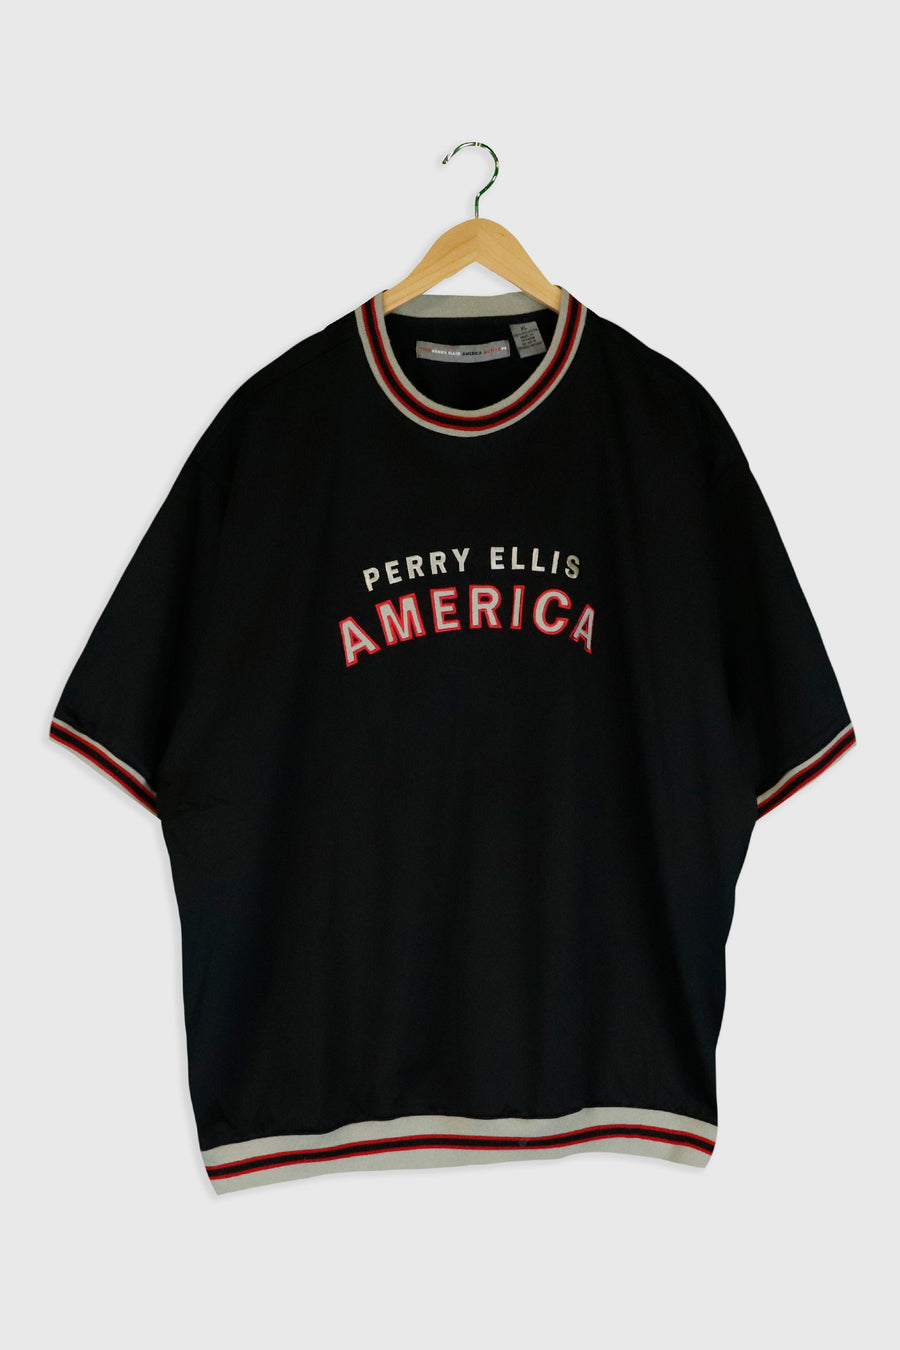 Vintage Perry Ellis America Patched Jersey Sz XL